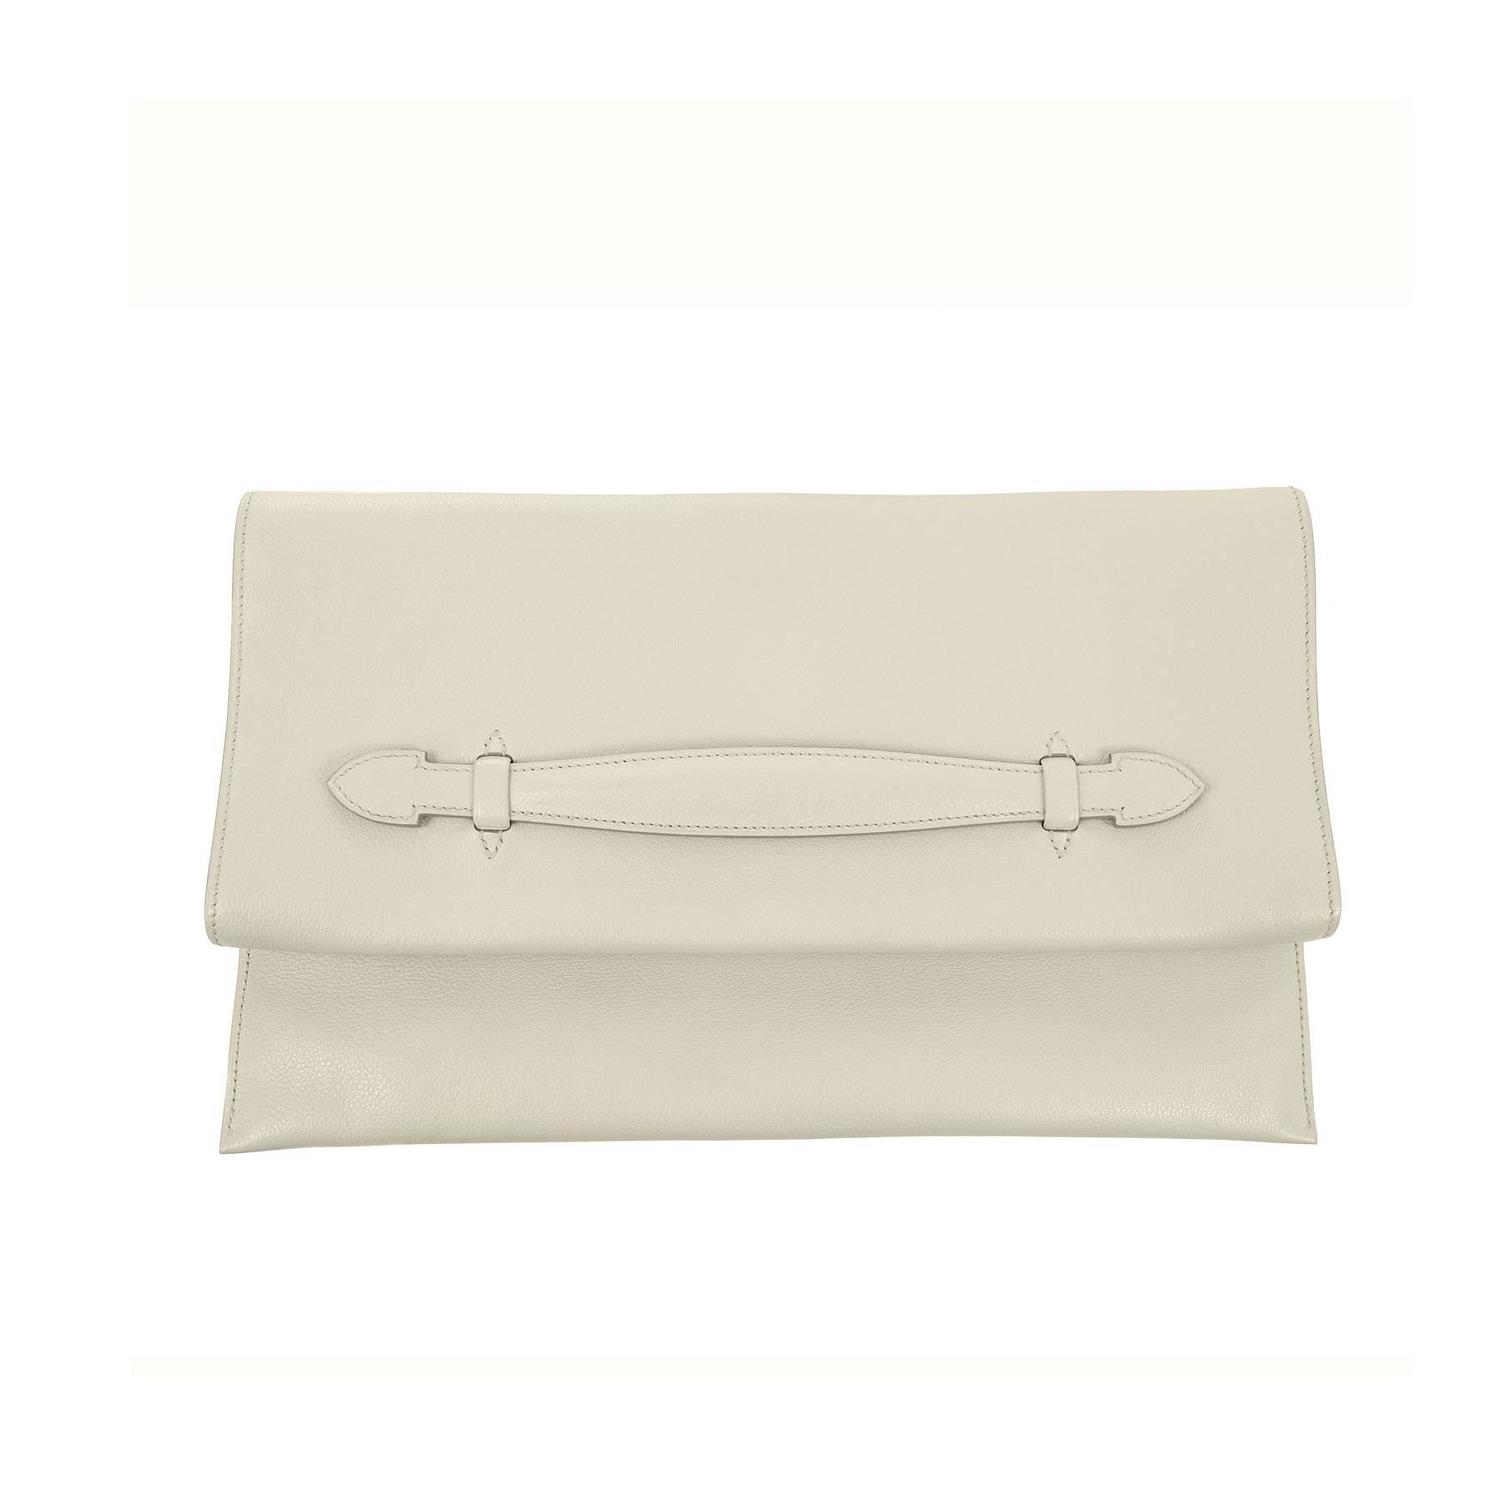 bag knockoffs - hermes gris perle leather envelope clutch, hermes birkin bag replica